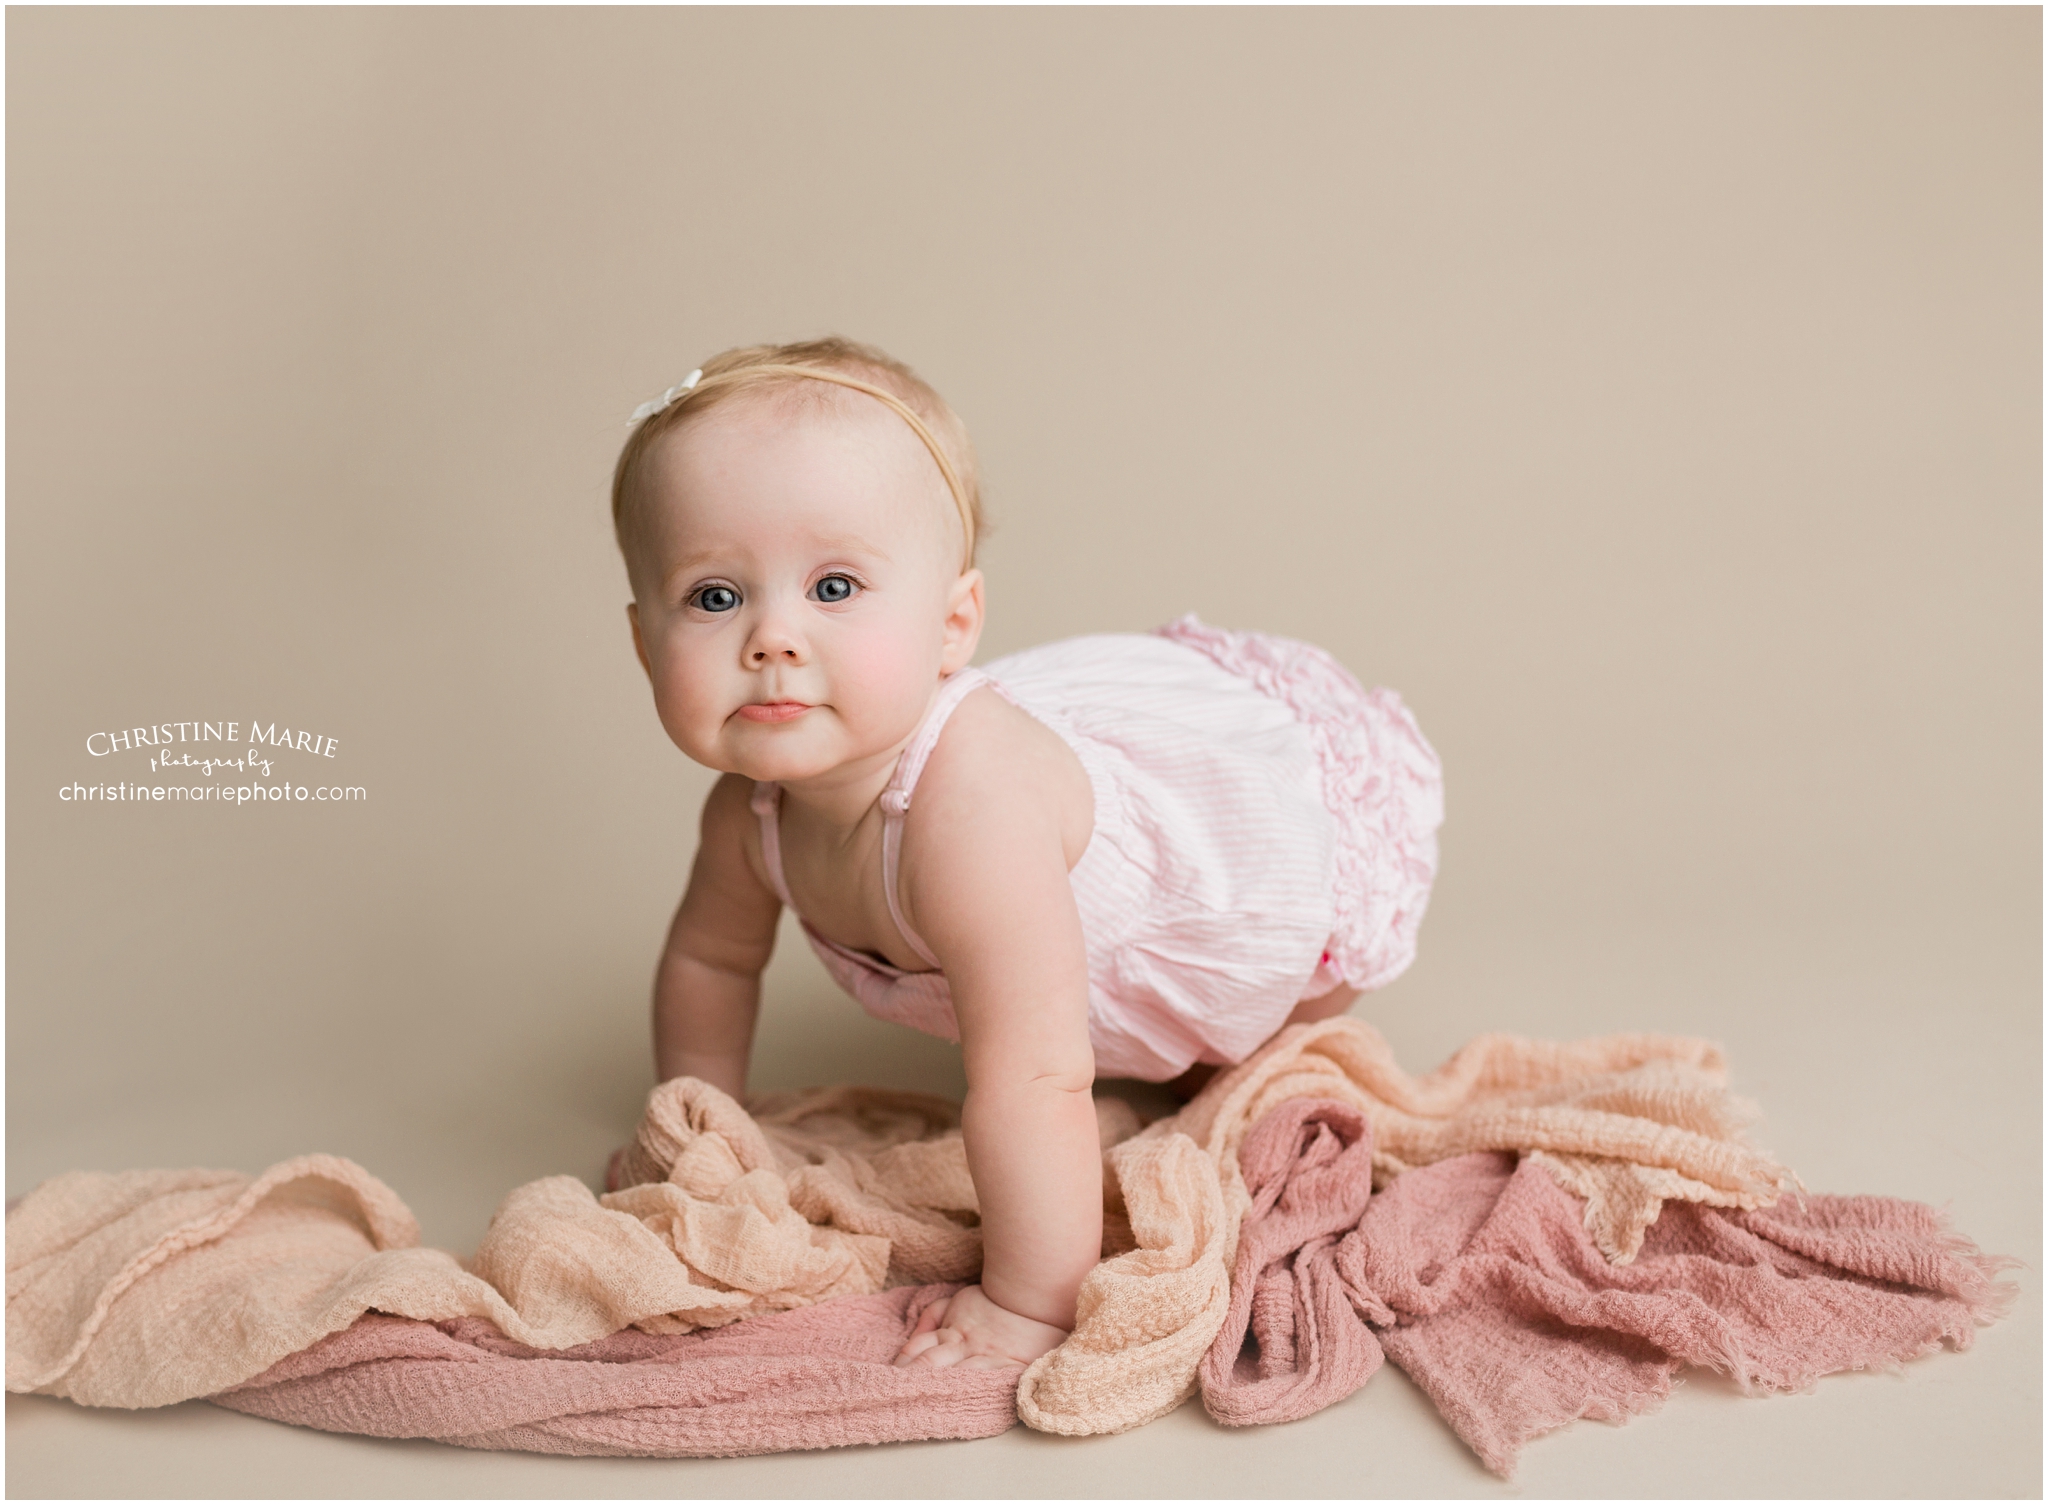 cumming baby photographer, christine marie photography